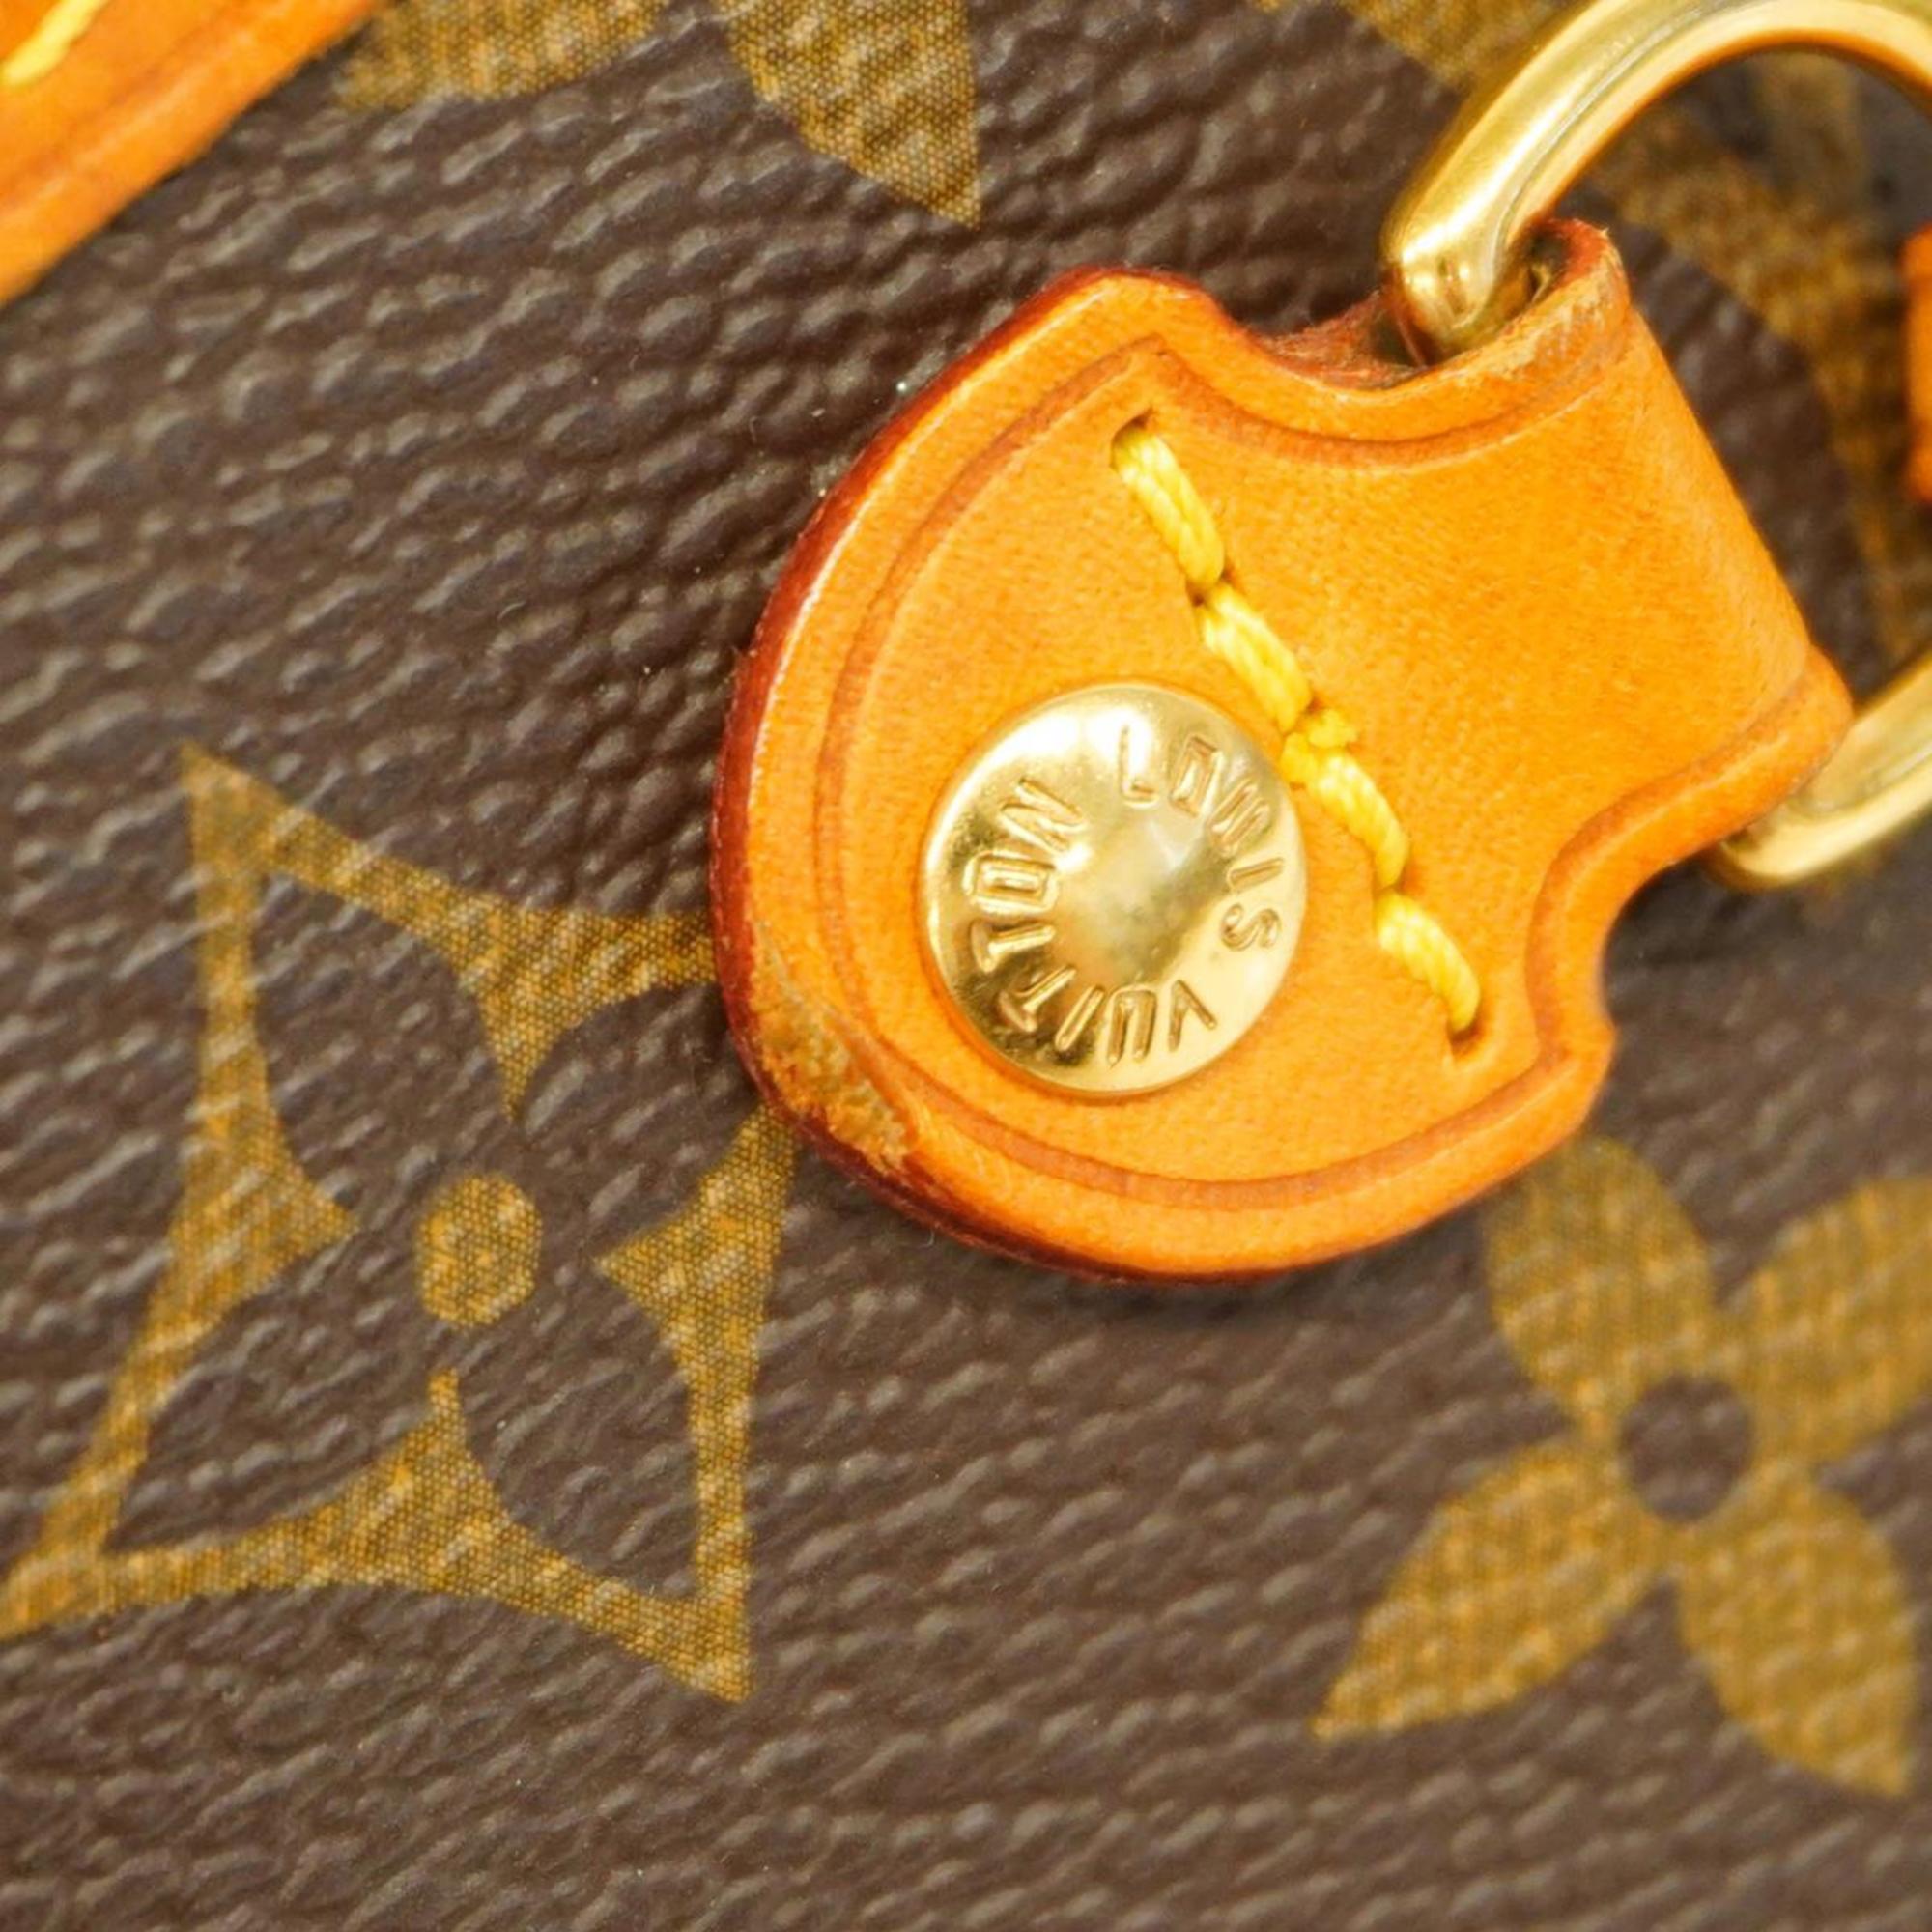 Louis Vuitton Tote Bag Monogram Neverfull PM M46979 Brown Women's